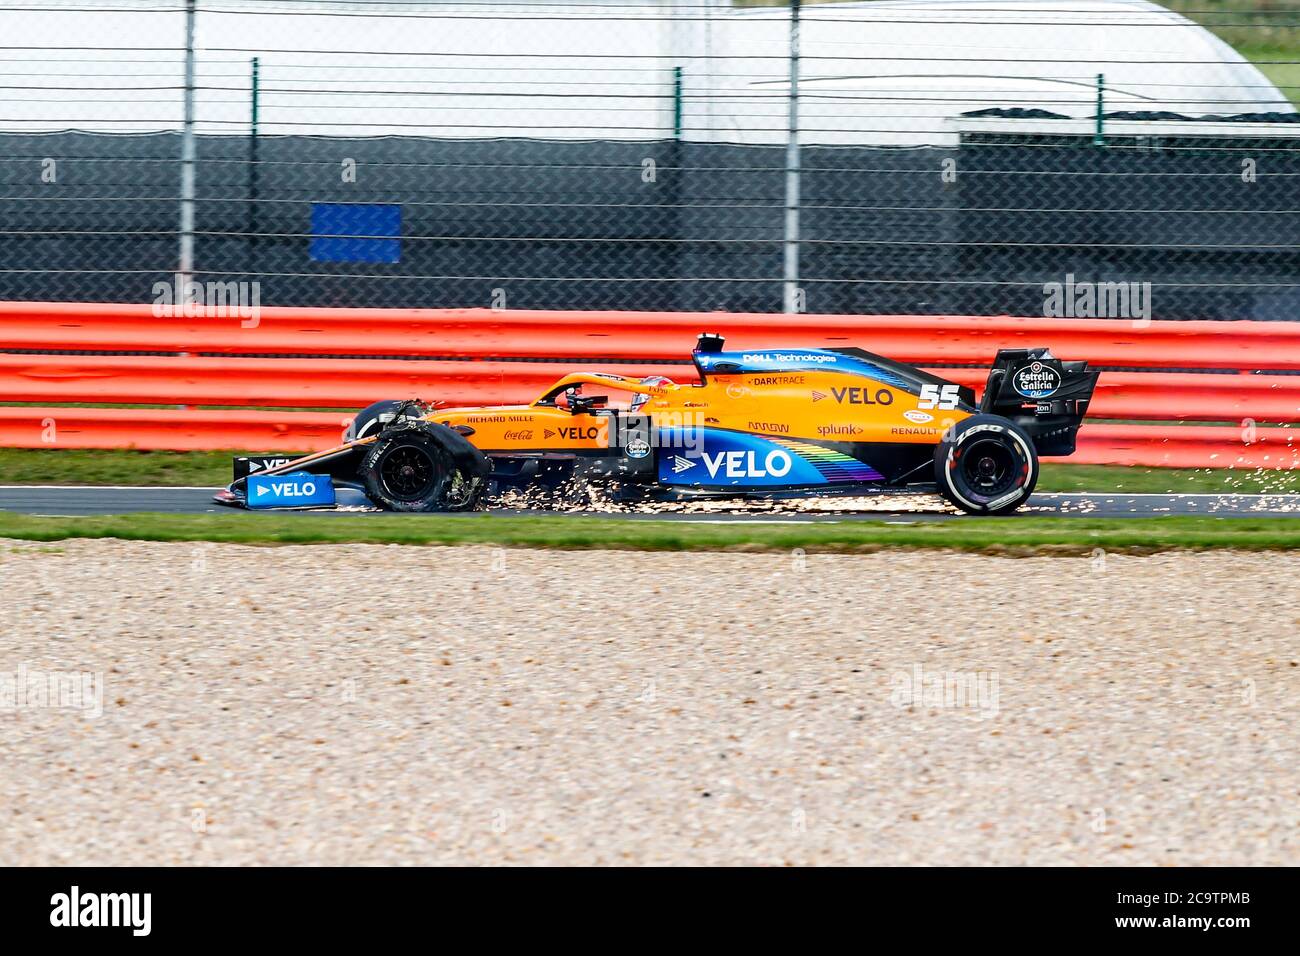 Carlos Sainz Jr. of McLaren during the 2020 British Grand Prix at Silverstone, Northamptonshire. Stock Photo